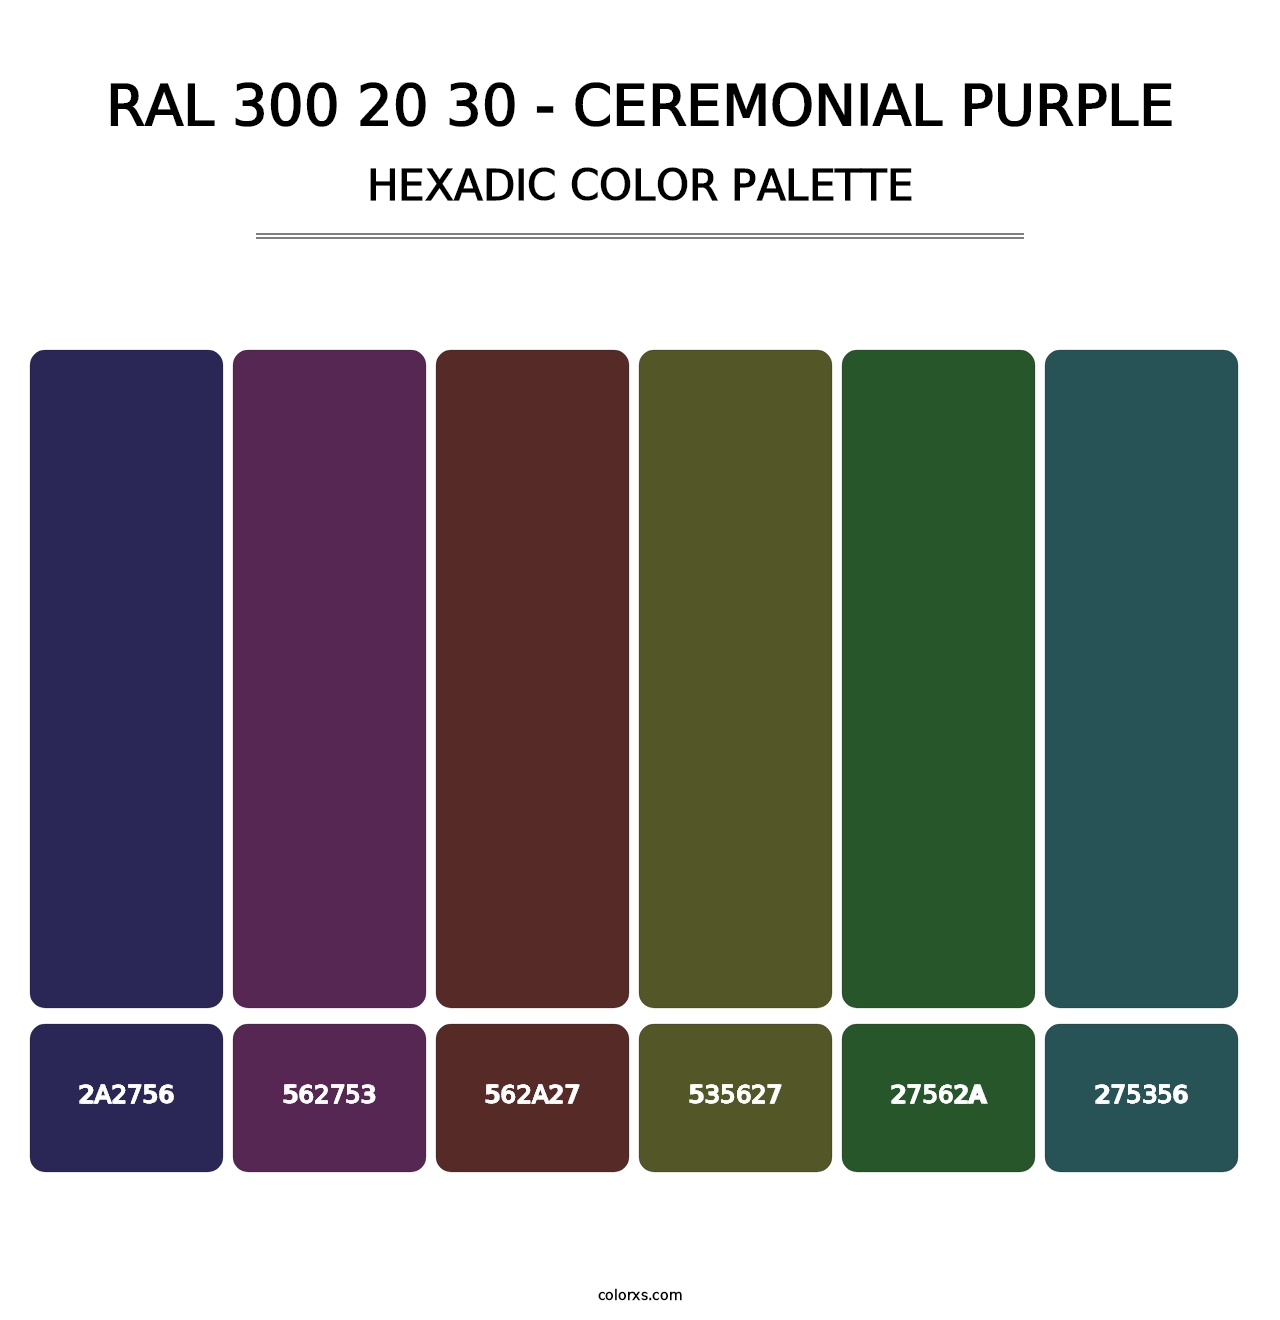 RAL 300 20 30 - Ceremonial Purple - Hexadic Color Palette